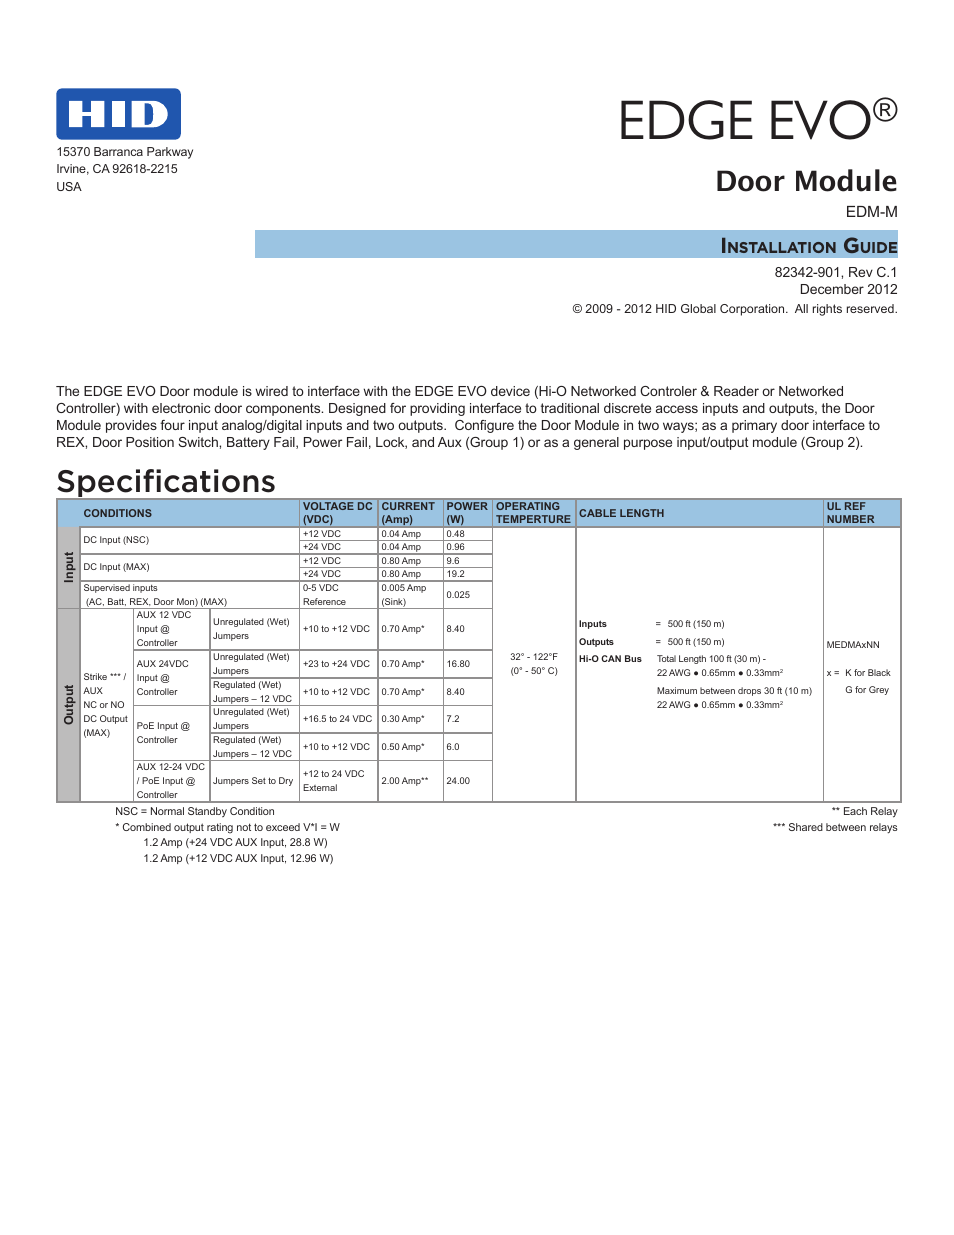 EDGE EVO EDM-M Door Module Installation Guide